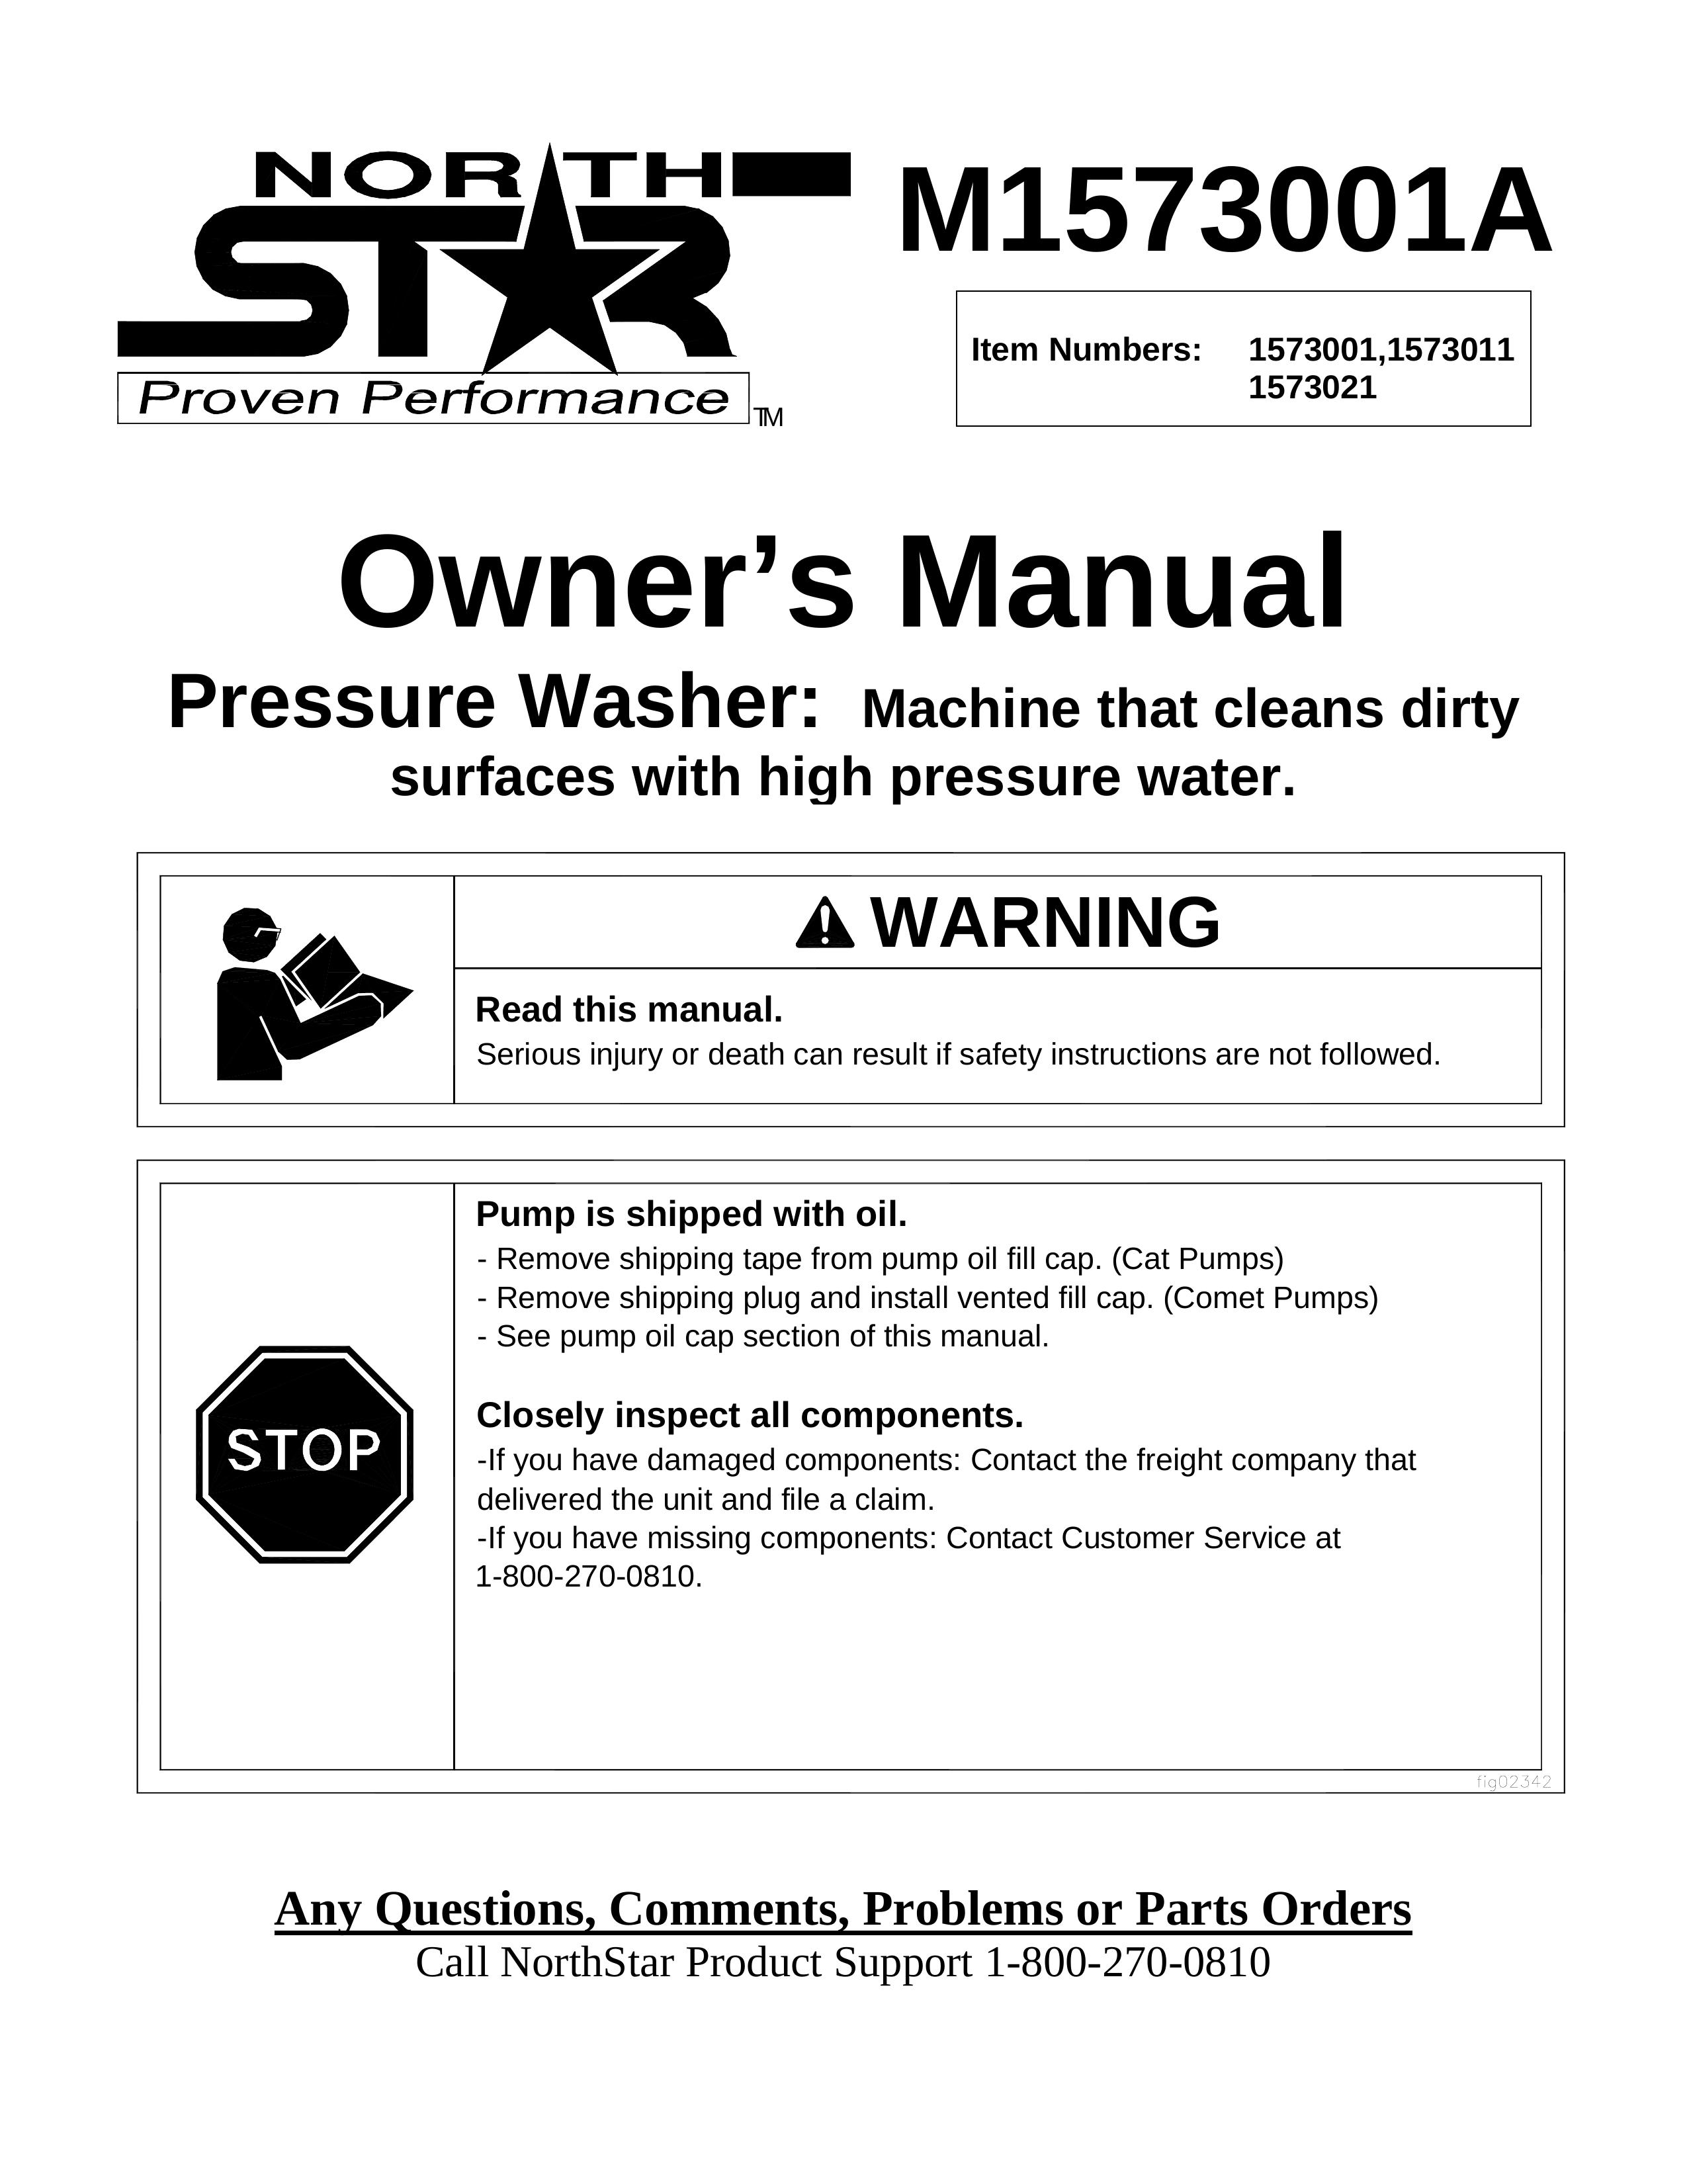 North Star M1573001A Pressure Washer User Manual